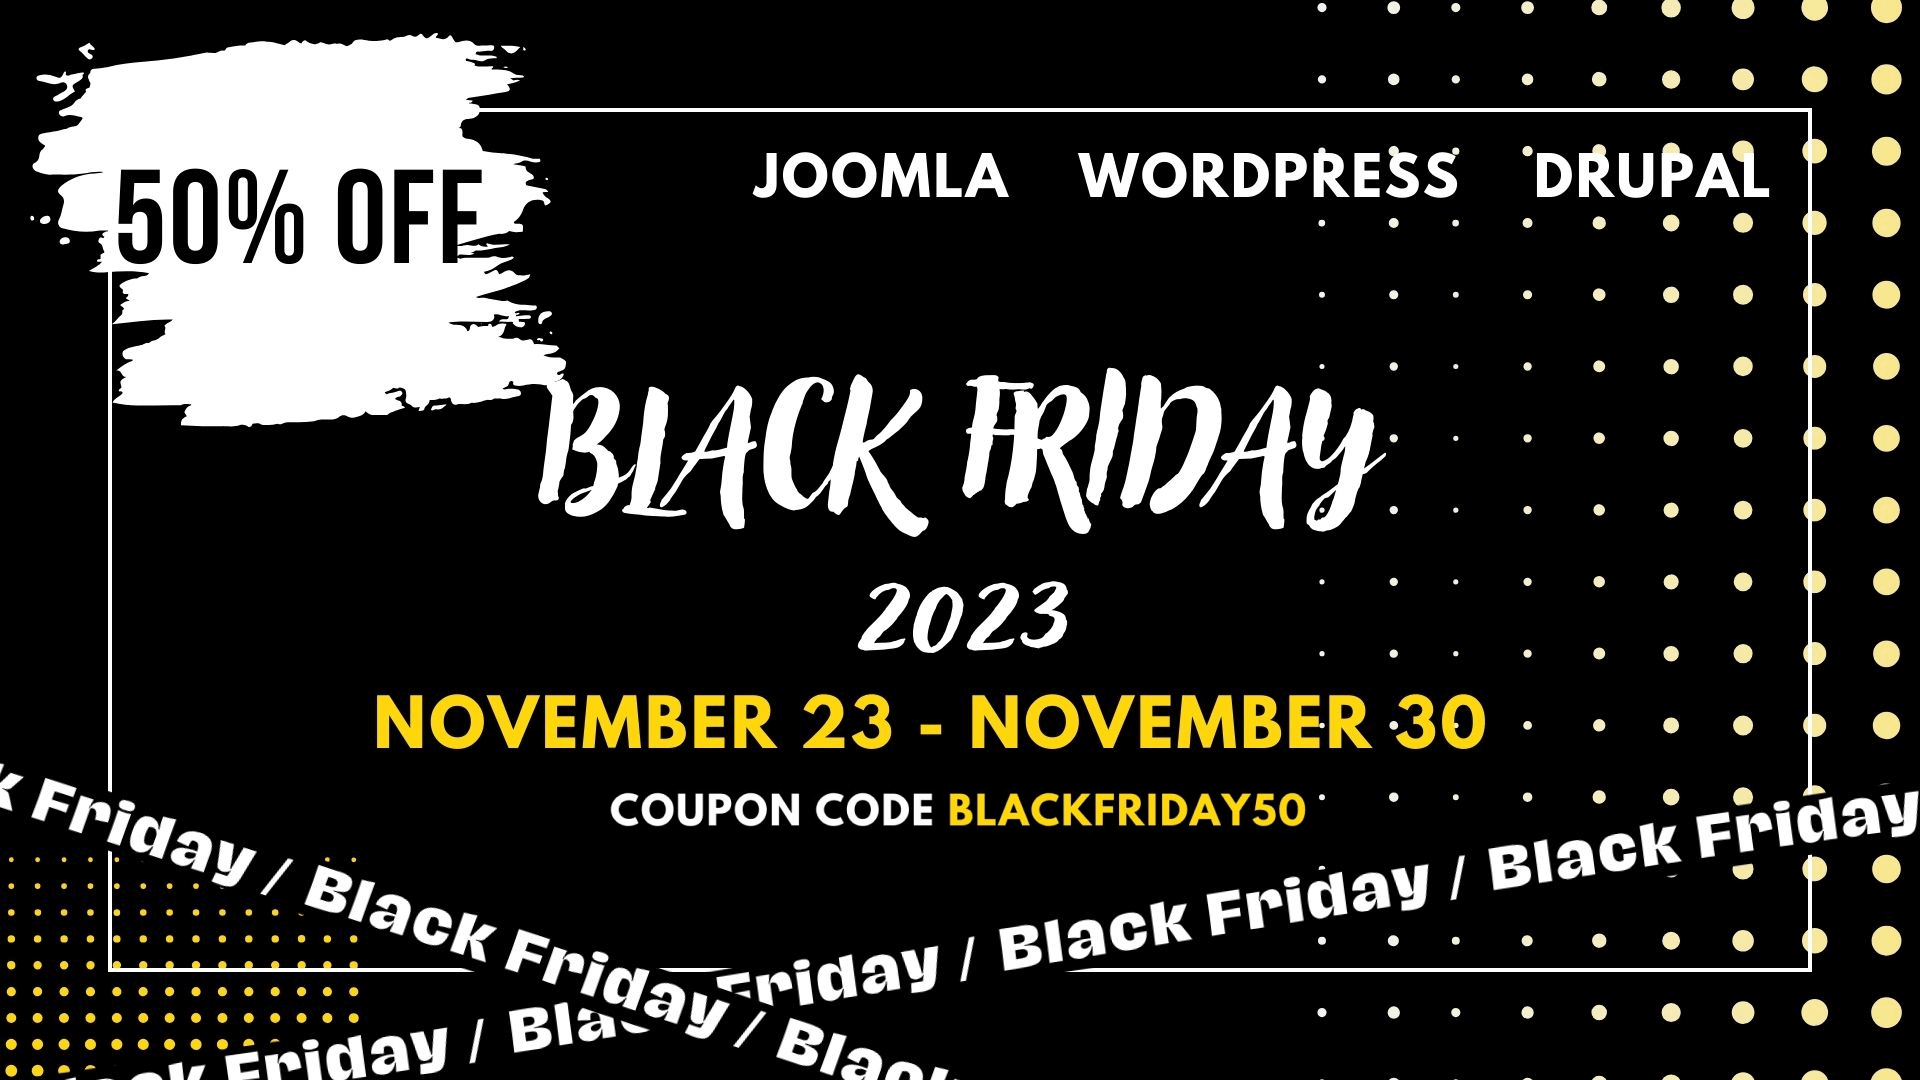 ordasoft Joomla News: BLACK FRIDAY 2023